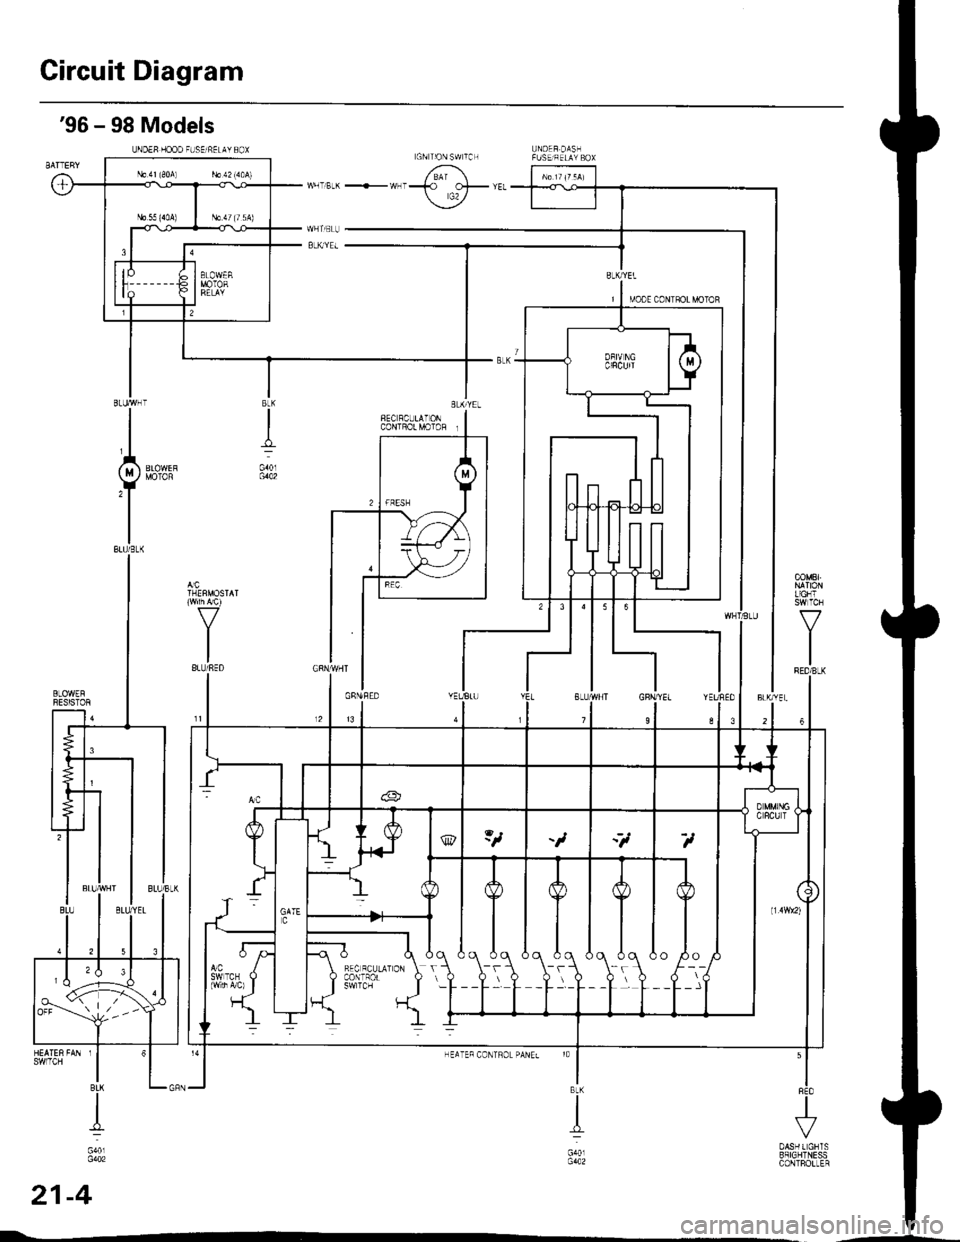 HONDA CIVIC 1996 6.G Workshop Manual Circuit Diagram
96 - 98 Models
LINDEF NoOD FUSETFELAY 30x
WNTTBLK +WFT
8L|(YEi
LIGHT
Y
I
No1l lS0Al Ni42 (40A)
S;rt | | lieti{,**i-t L-:} [:] | h
crca(.-A-o  \1 \-r. \-r-1 \\
!9[1 ? _?__?? _t__?